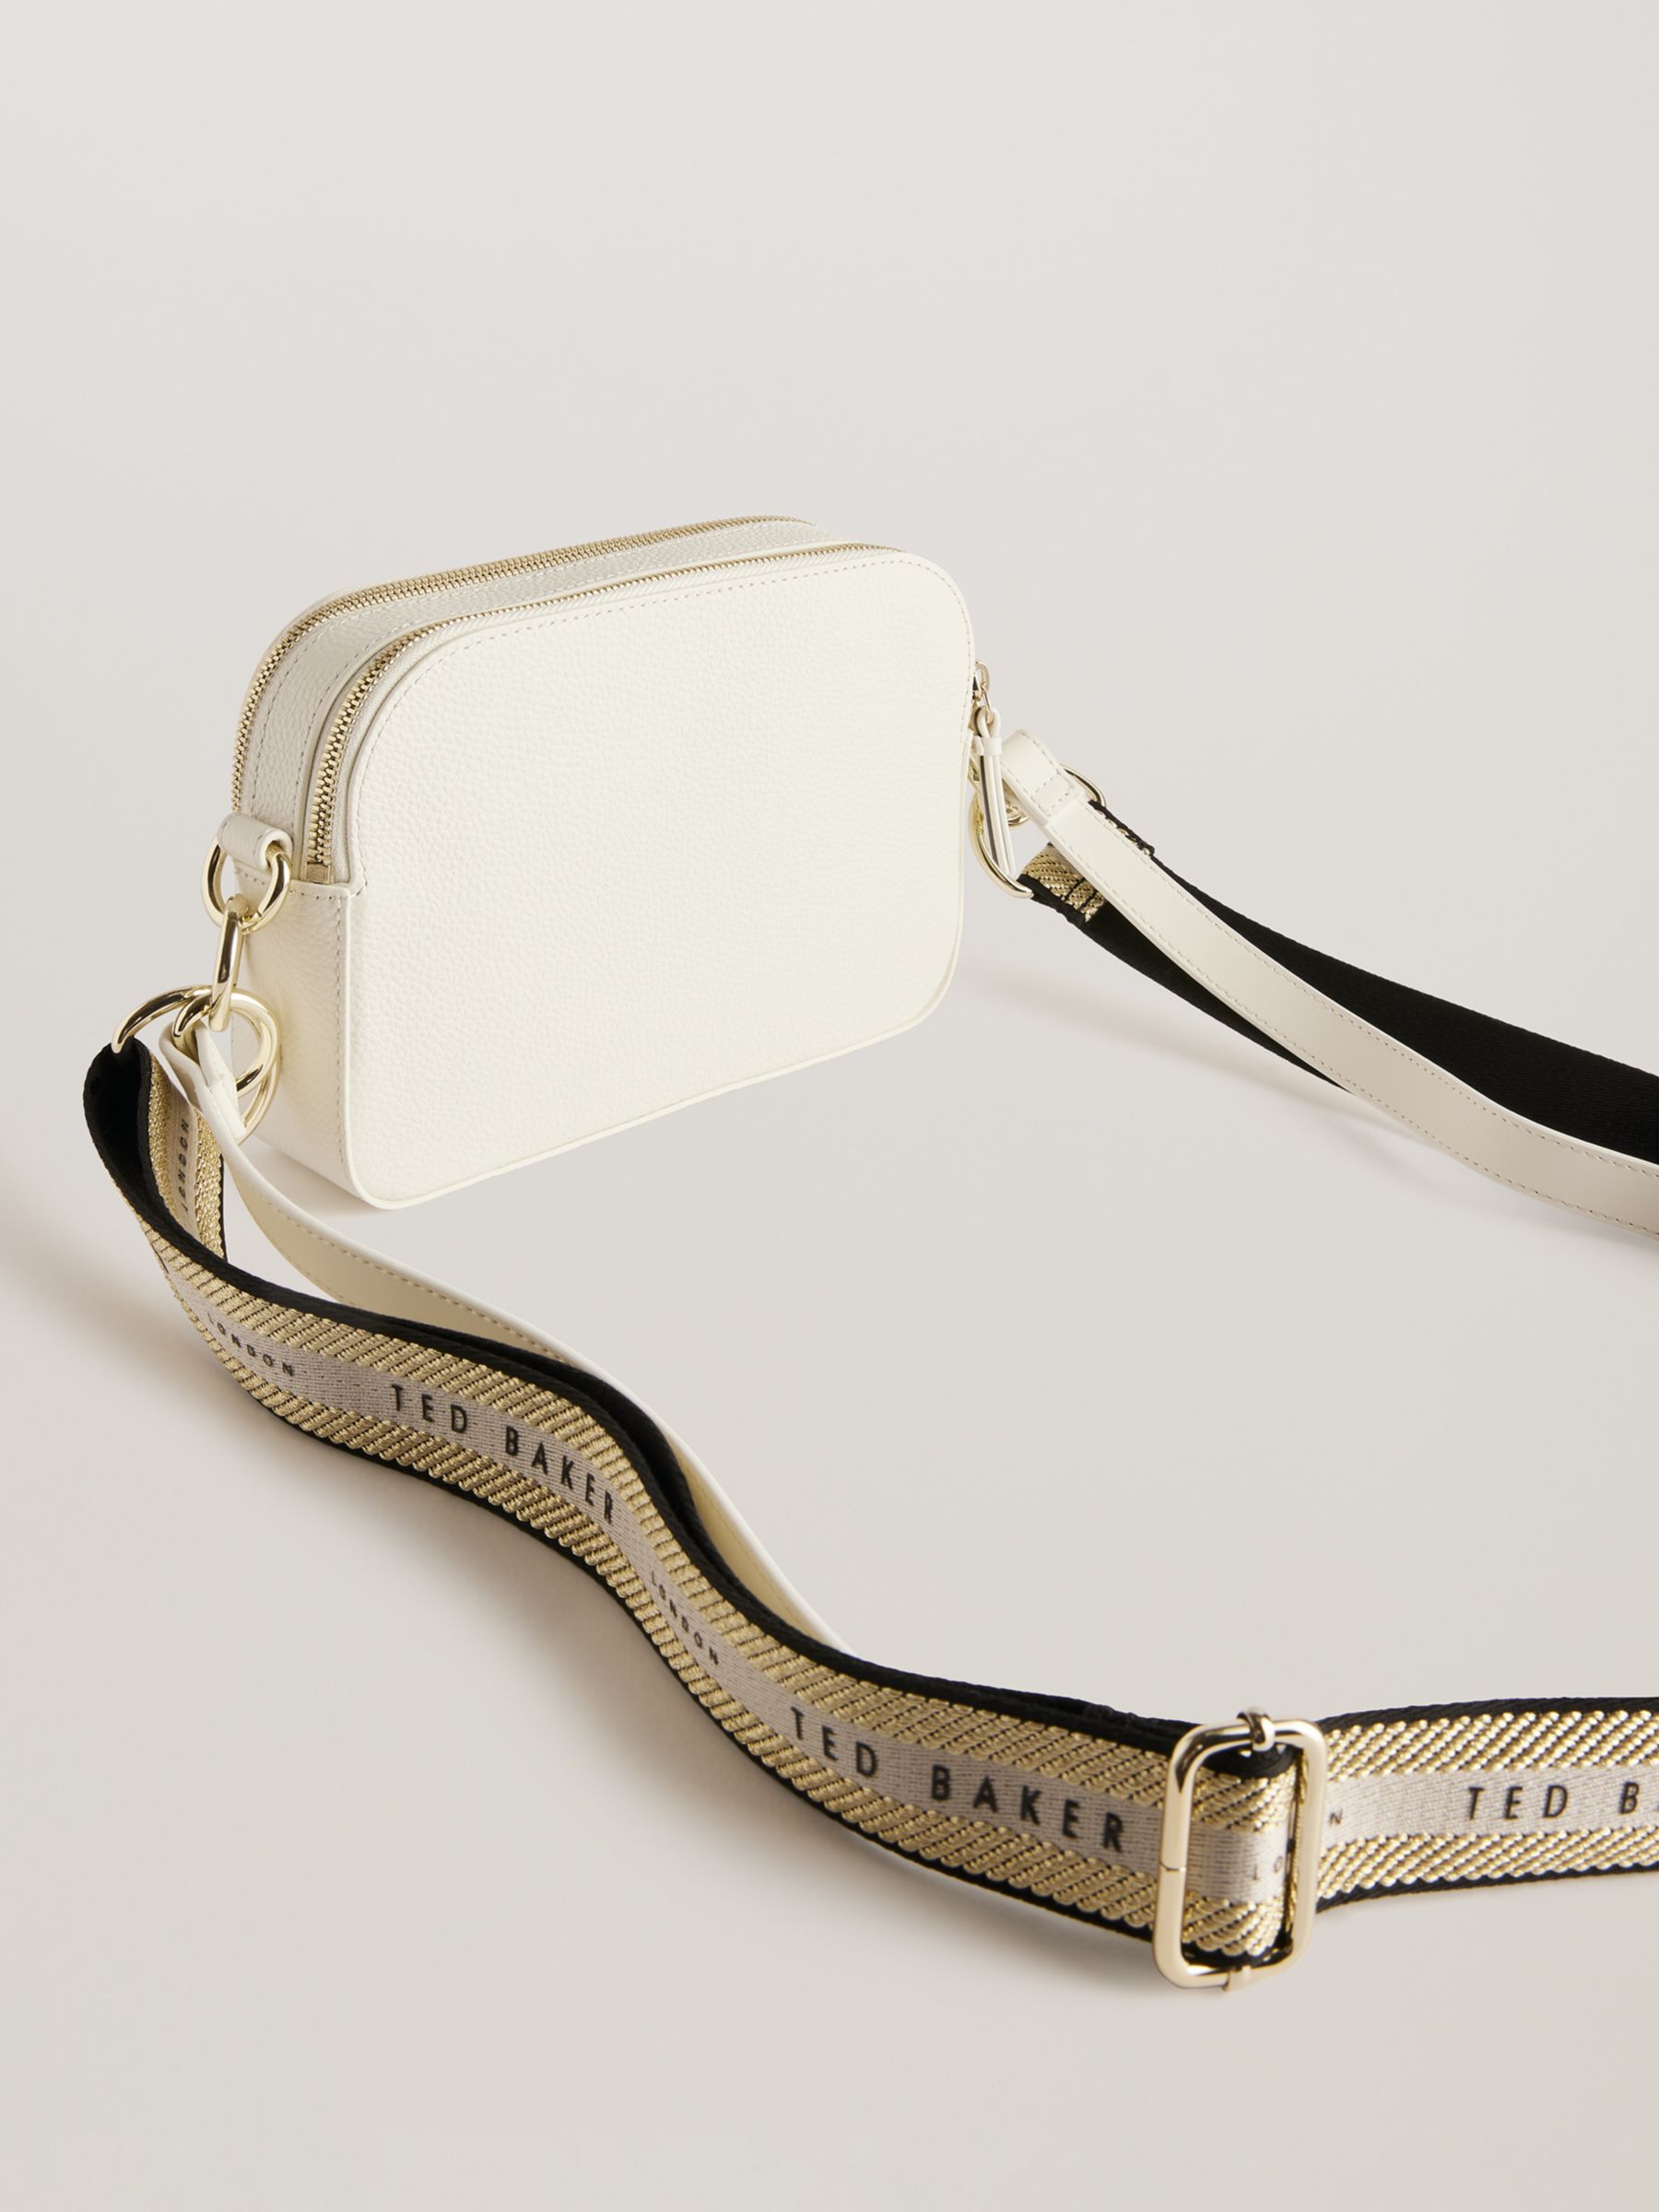 Ted Baker Dailiah Branded Webbing Leather Camera Bag, White White, Stnd